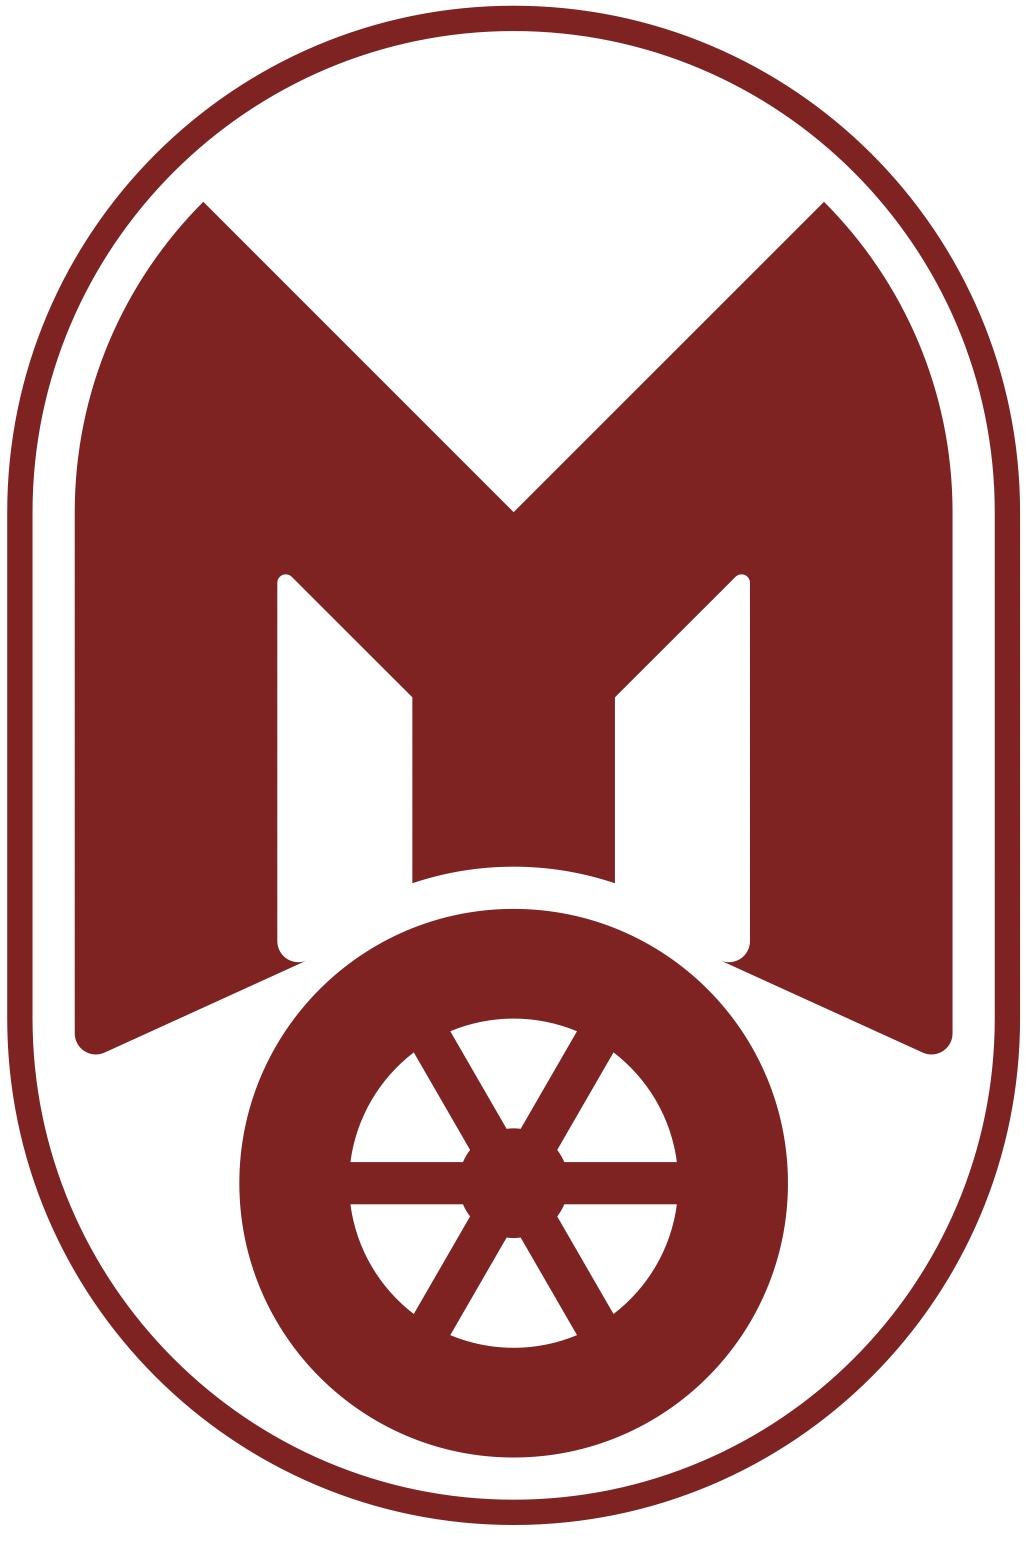 Transportation Company - Mitropa - Railroad